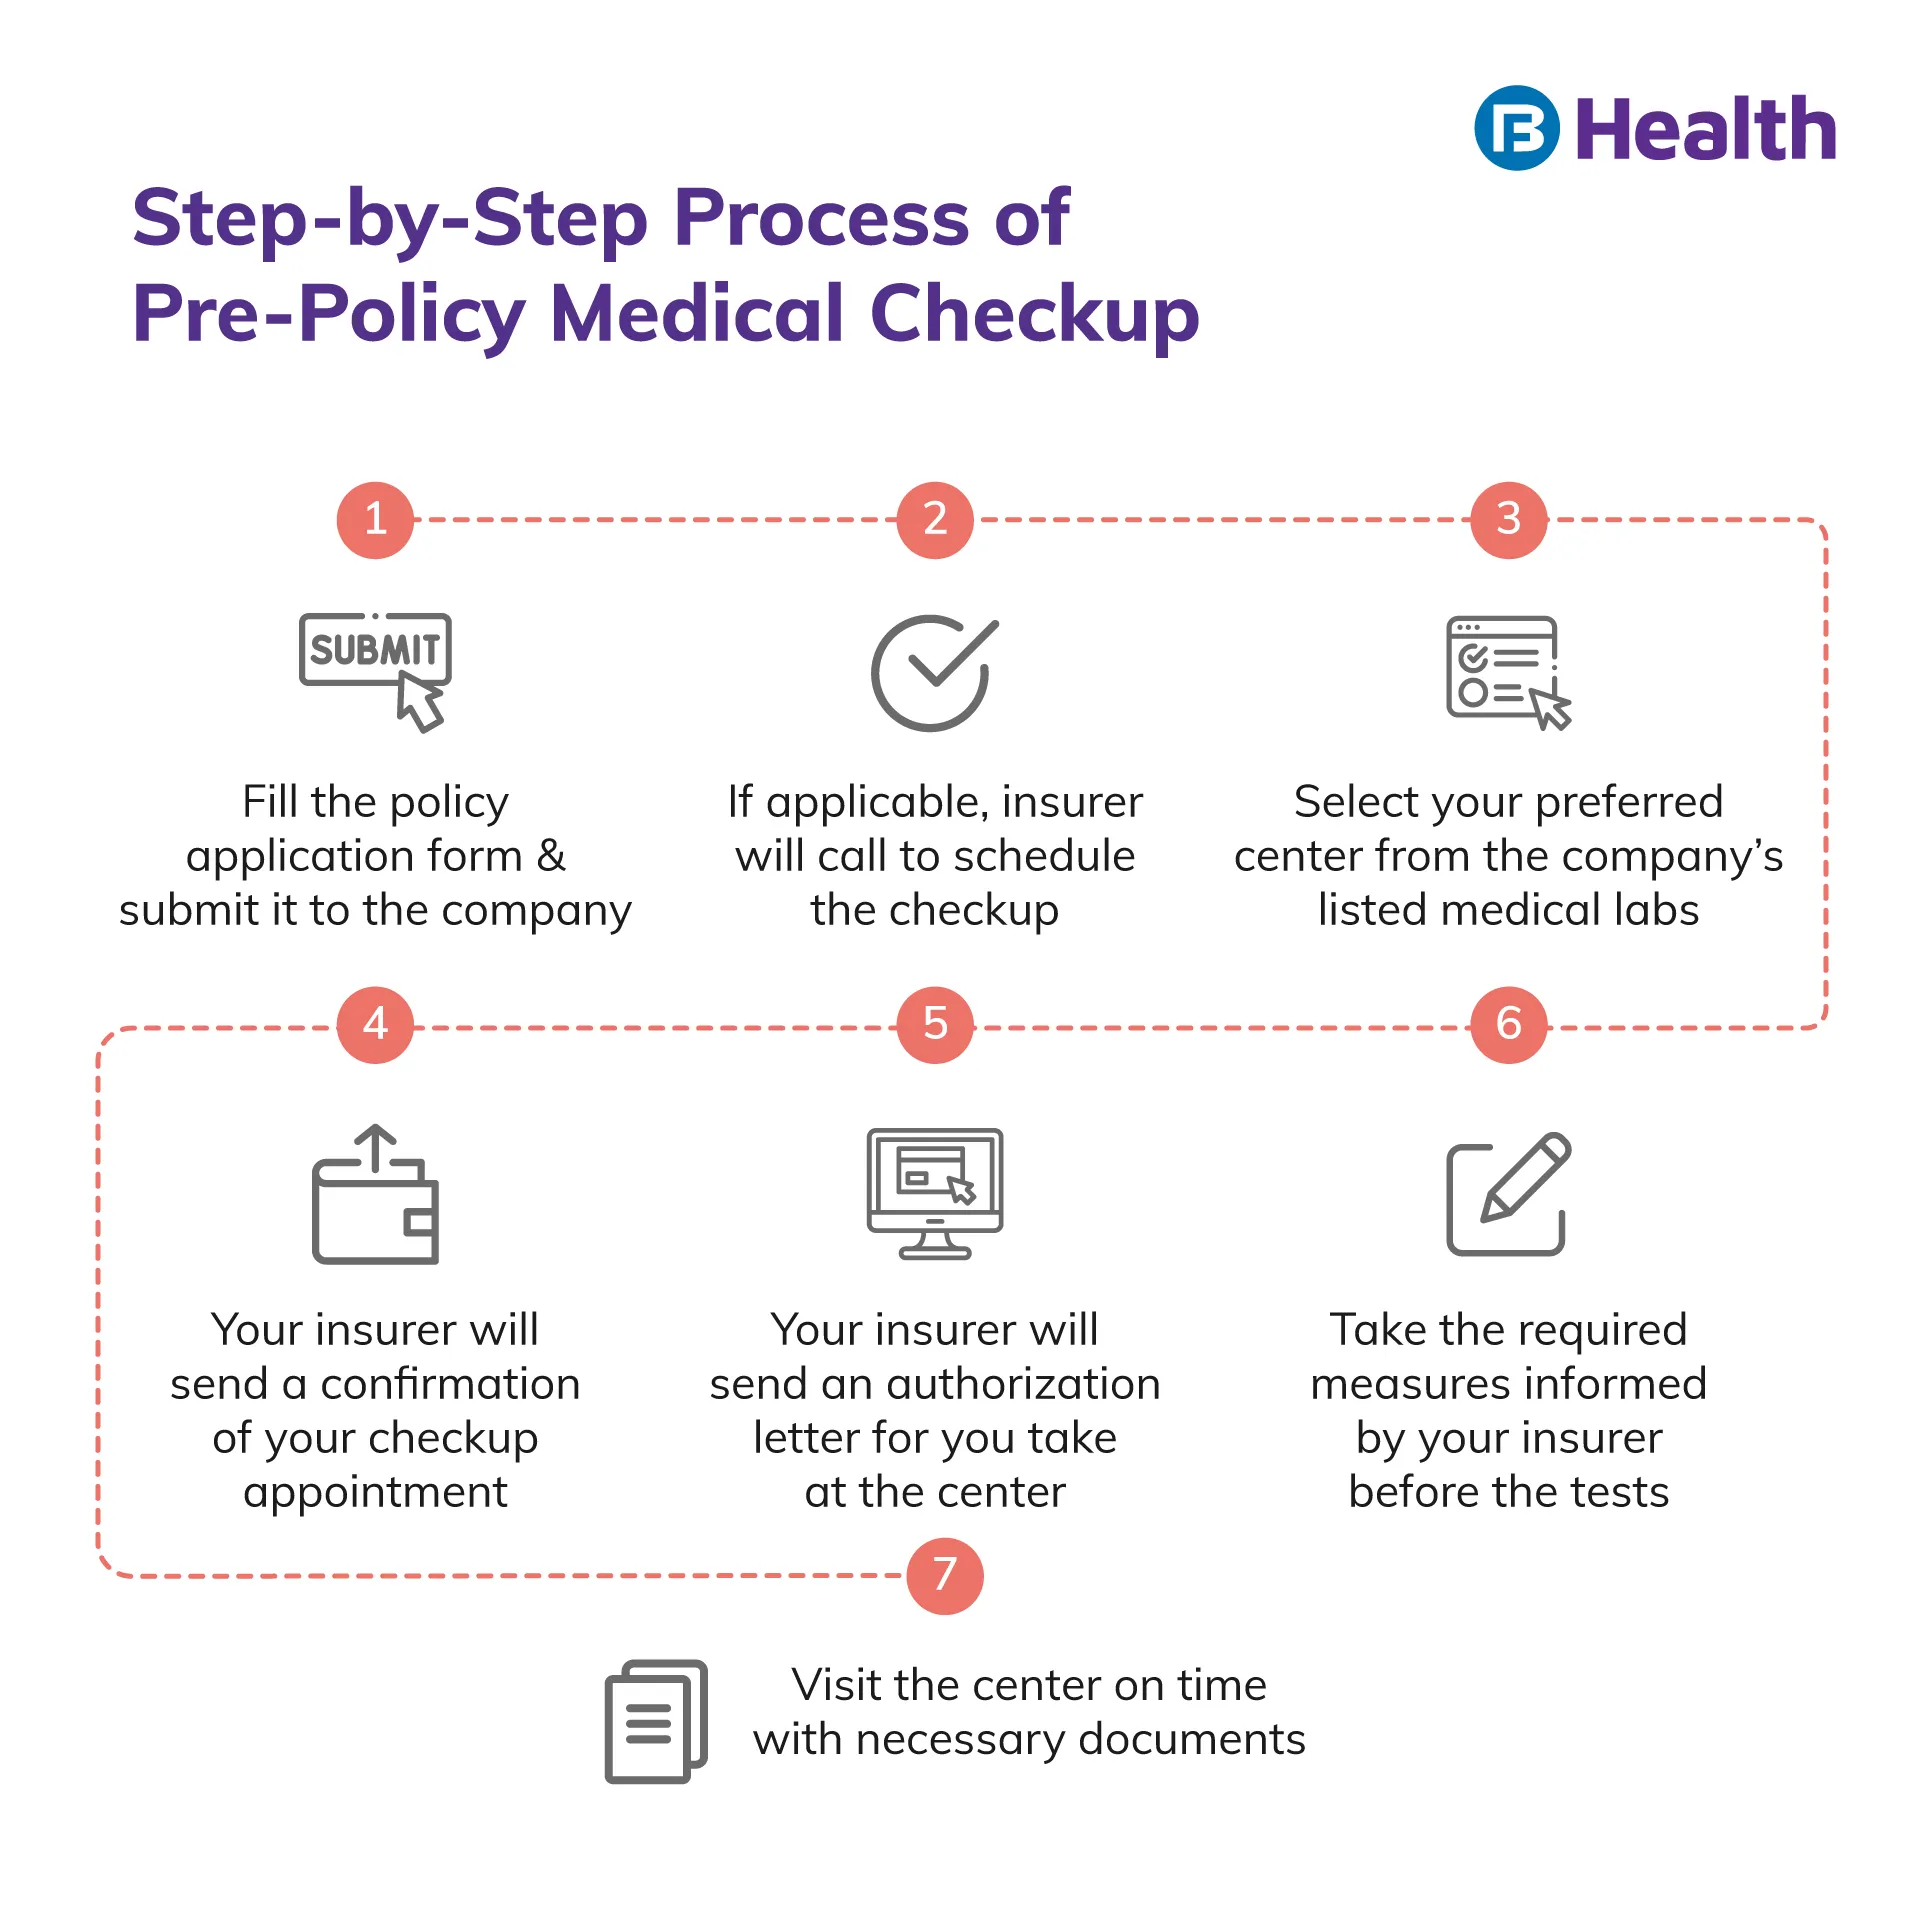 steps for Pre-policy Medical Checkup